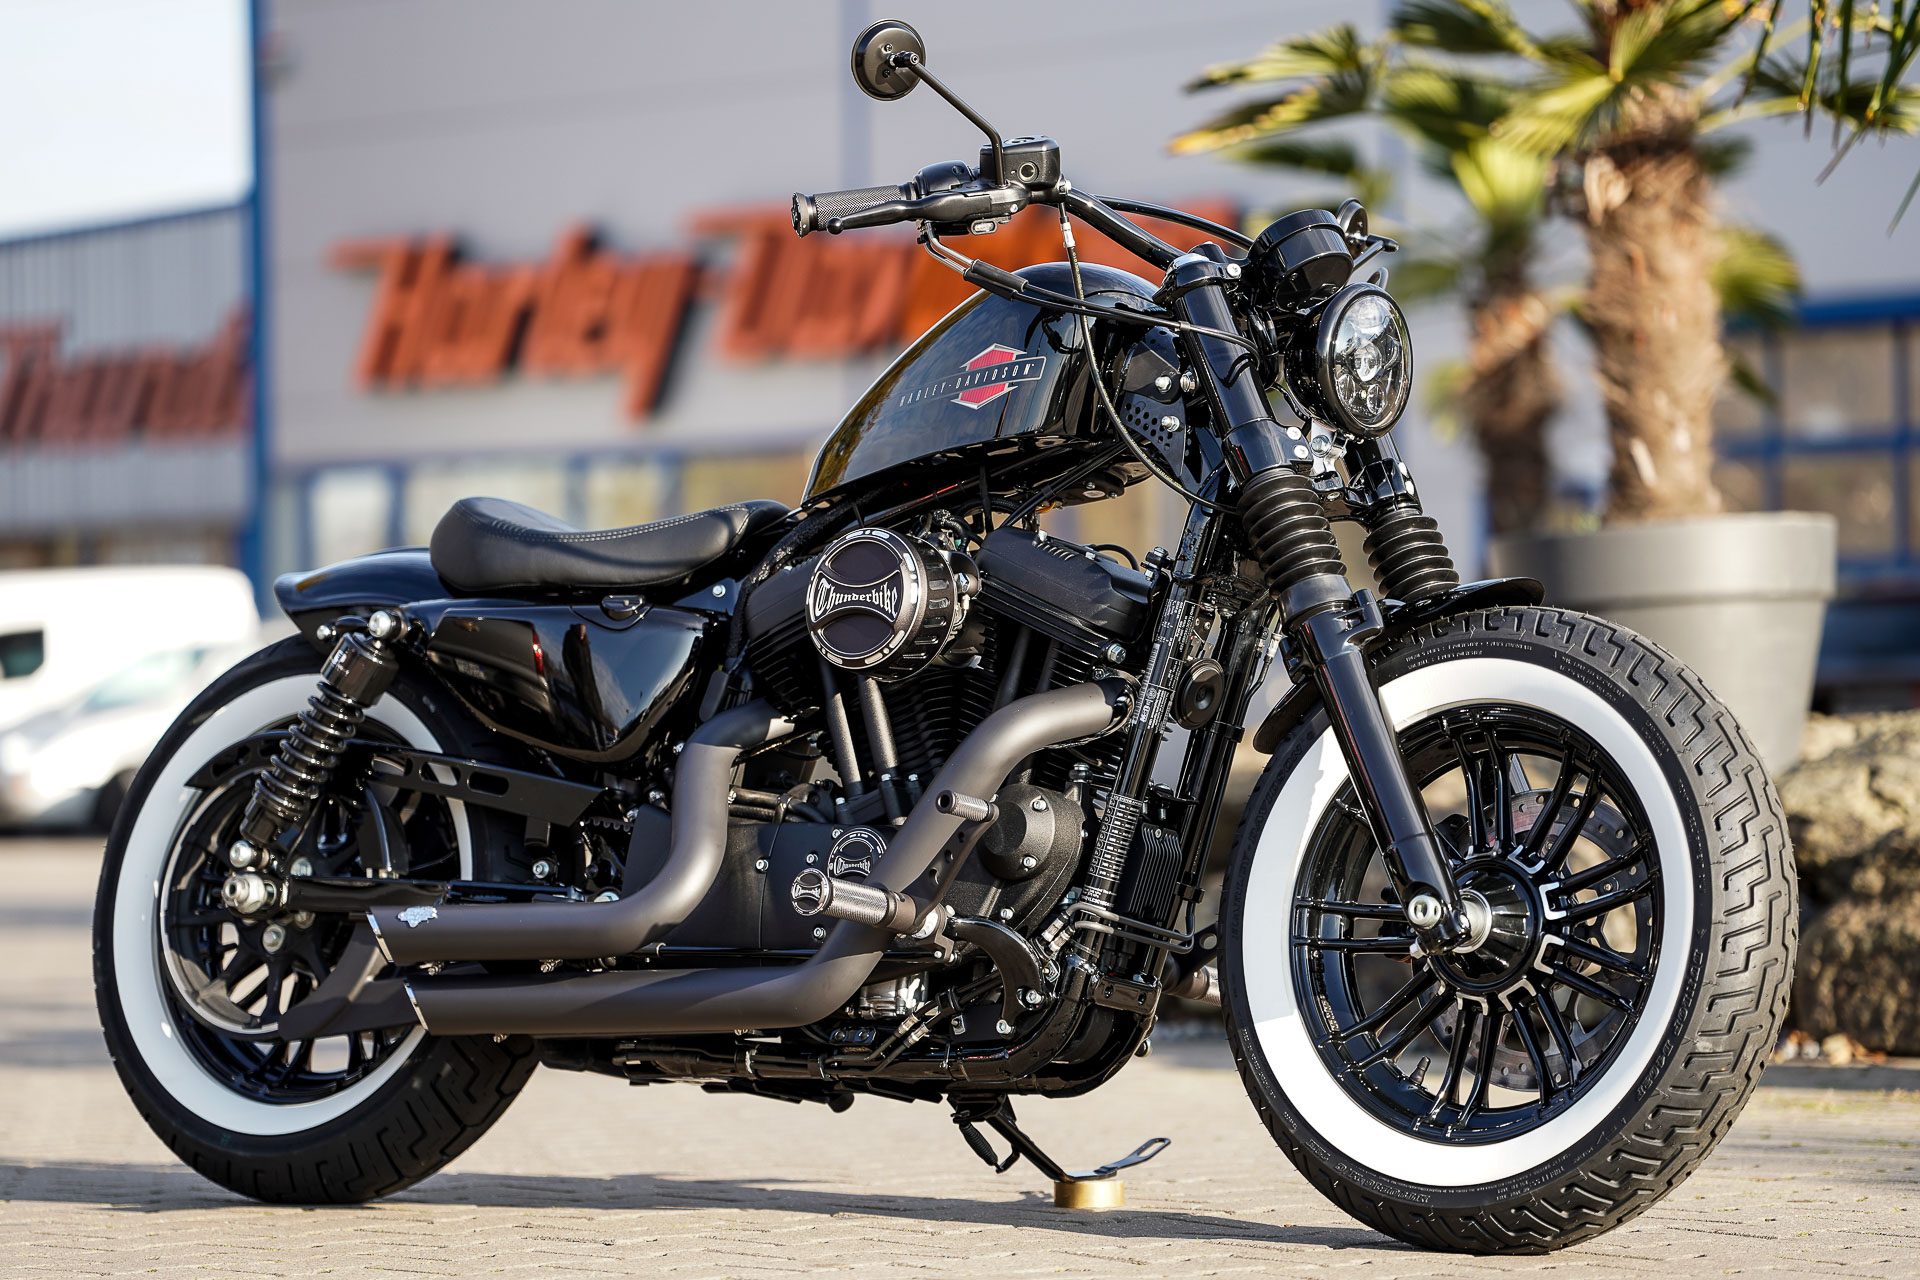 https://www.thunderbike.com/wp-content/uploads/2019/04/Thunderbike-Harley-Davidson-Harmony-48-Foto-Ben-Ott-4-1920x1280.jpg